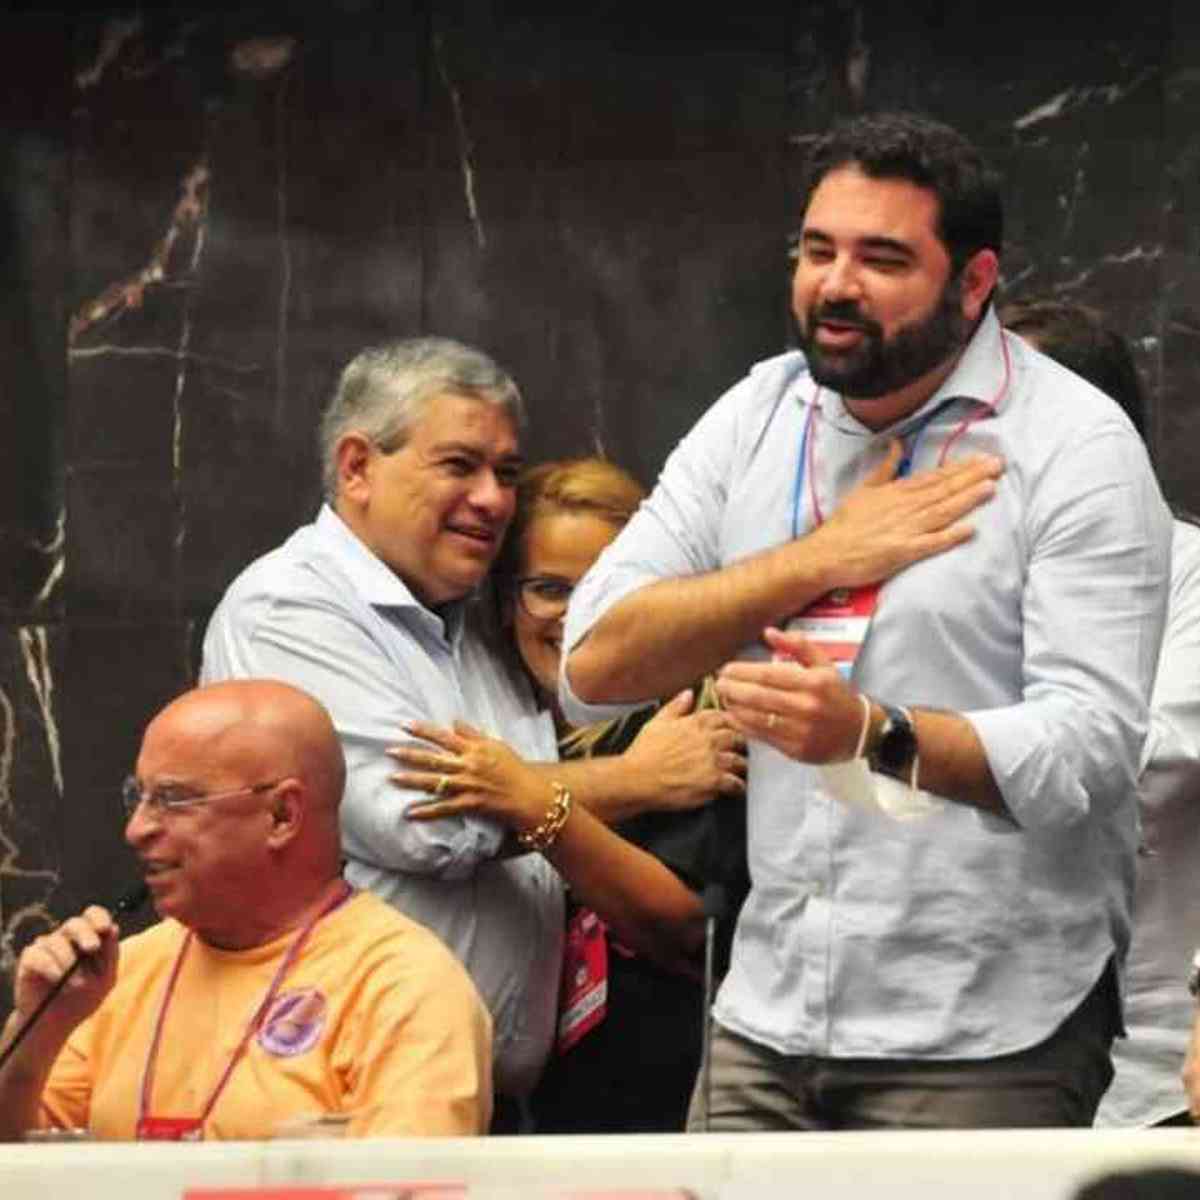 Vereador Bruno Miranda vai disputar o senado pelo PDT